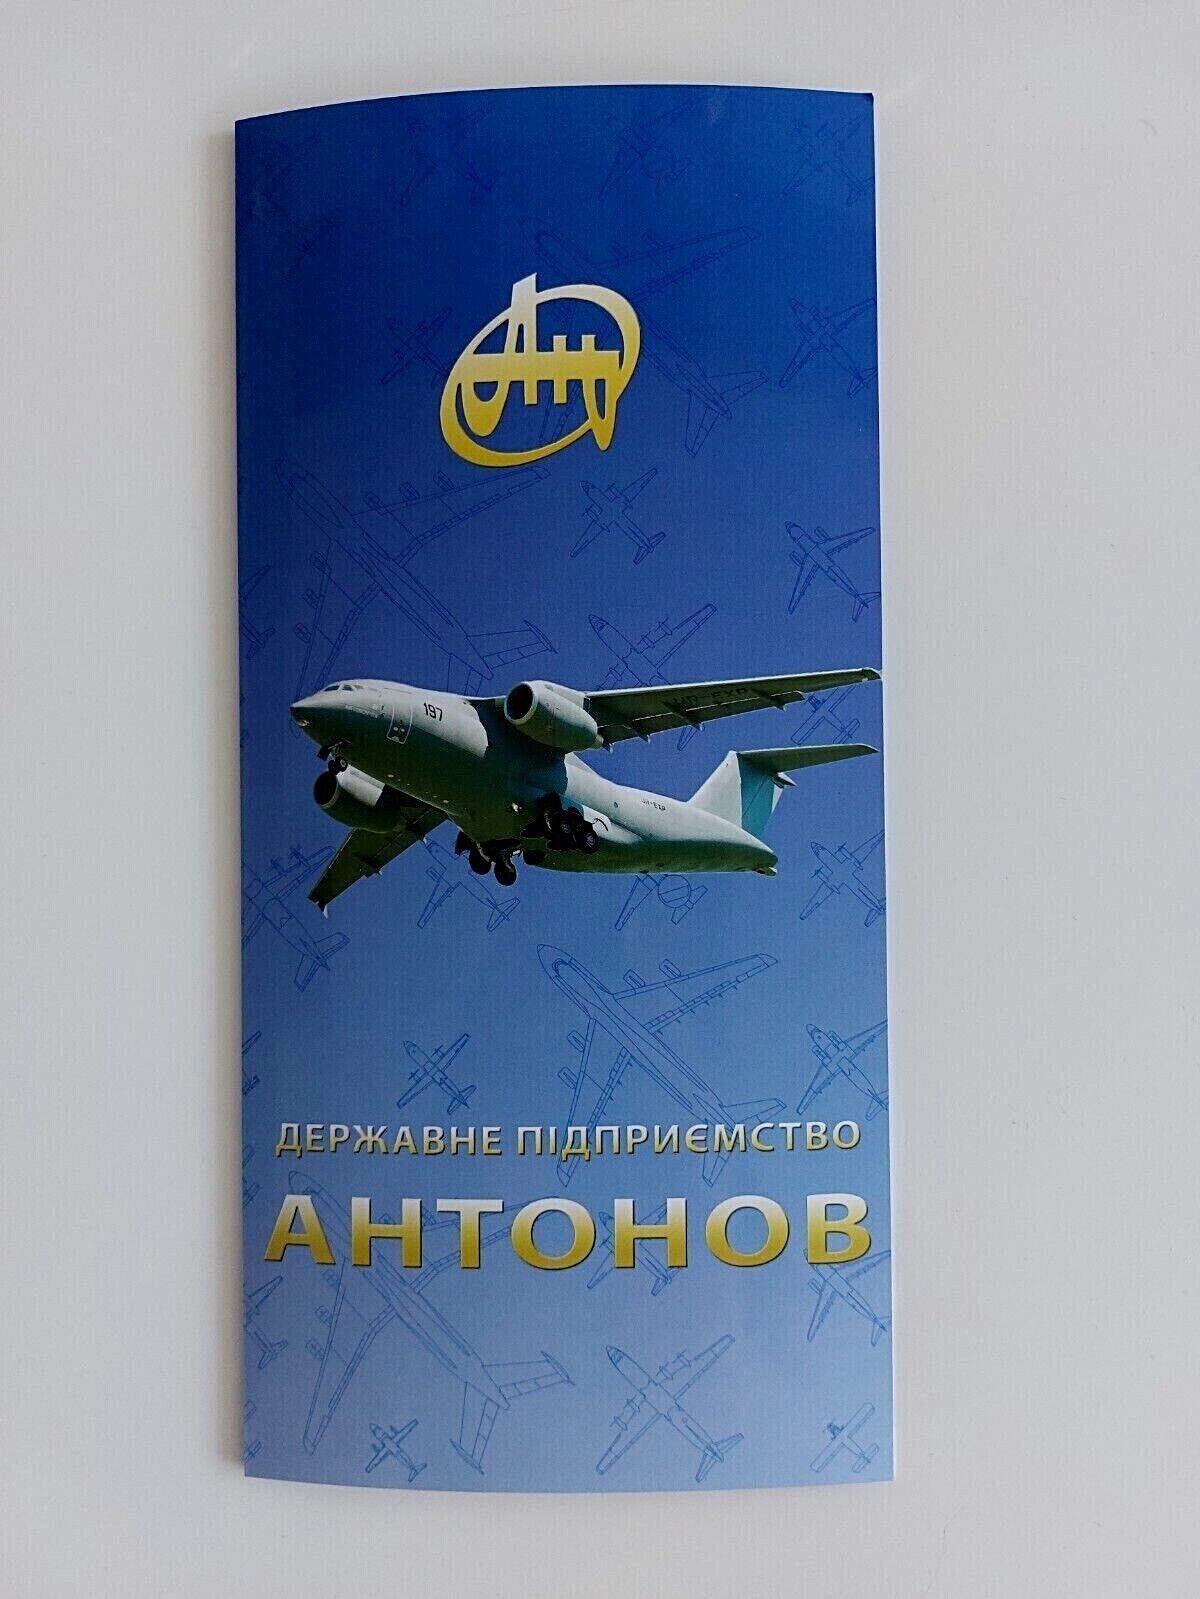 ANTONOV Ukrainian Air Craft Brochure Catalog Production Line Up of ANTONOV